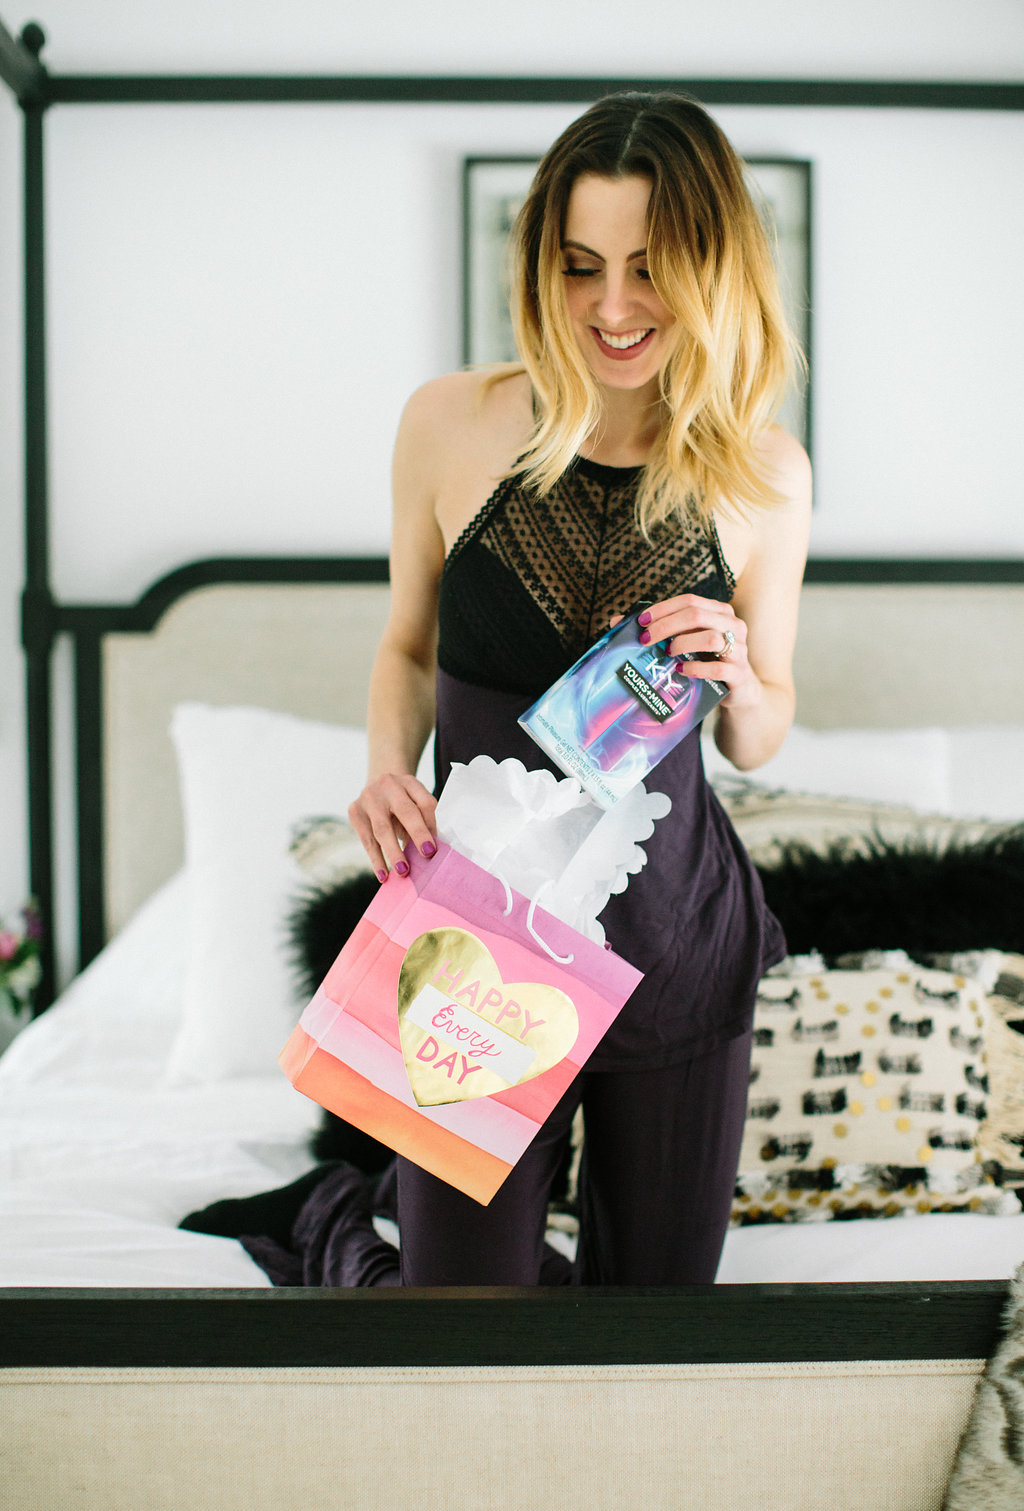 Eva Amurri Martino puts a box of K-Y lubricant in to a Valentine's Day gift bag